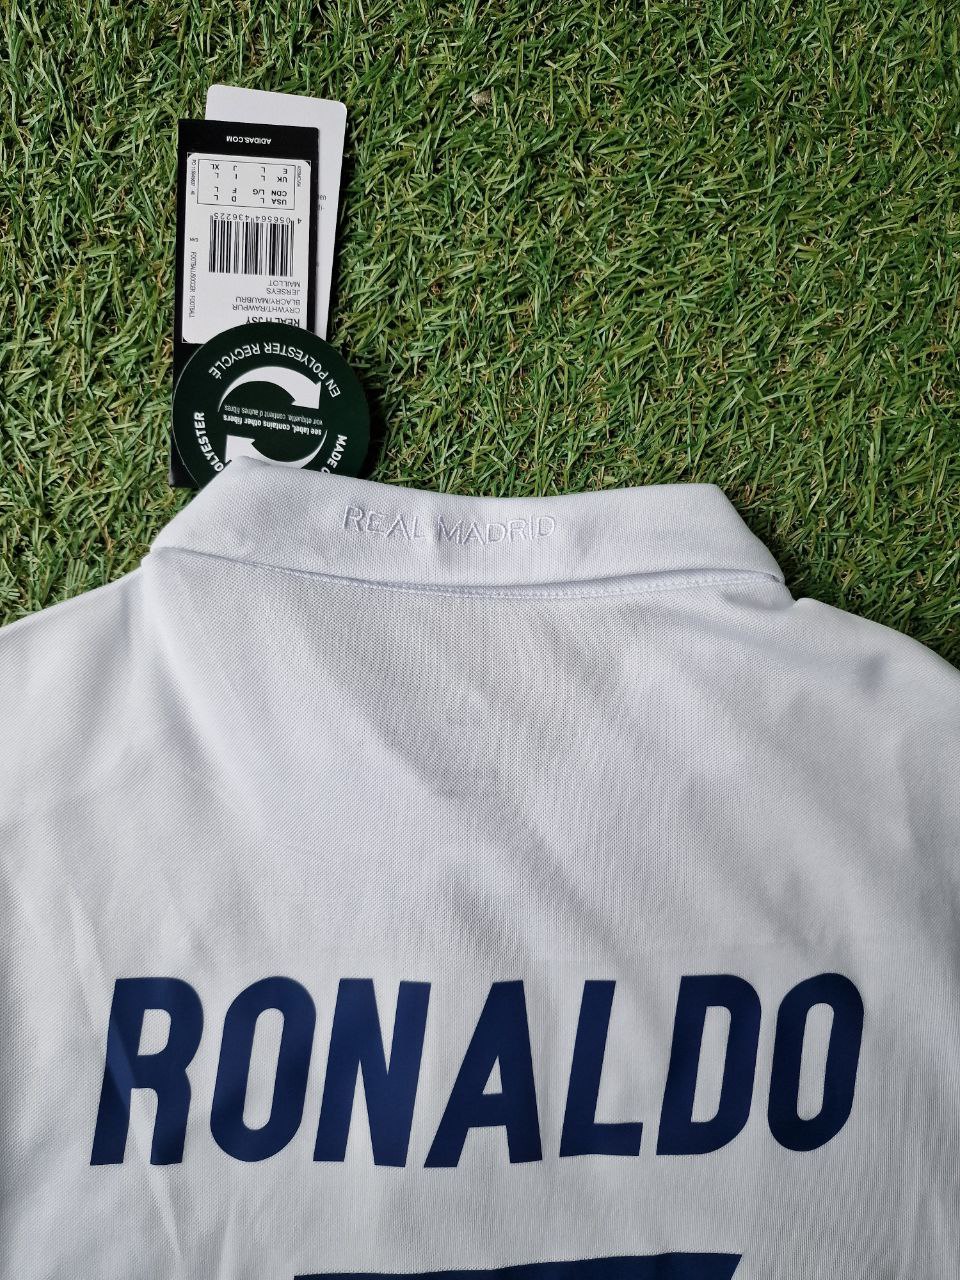 Cristiano Ronaldo Real Madrid Weißes Retro-Fußballtrikot